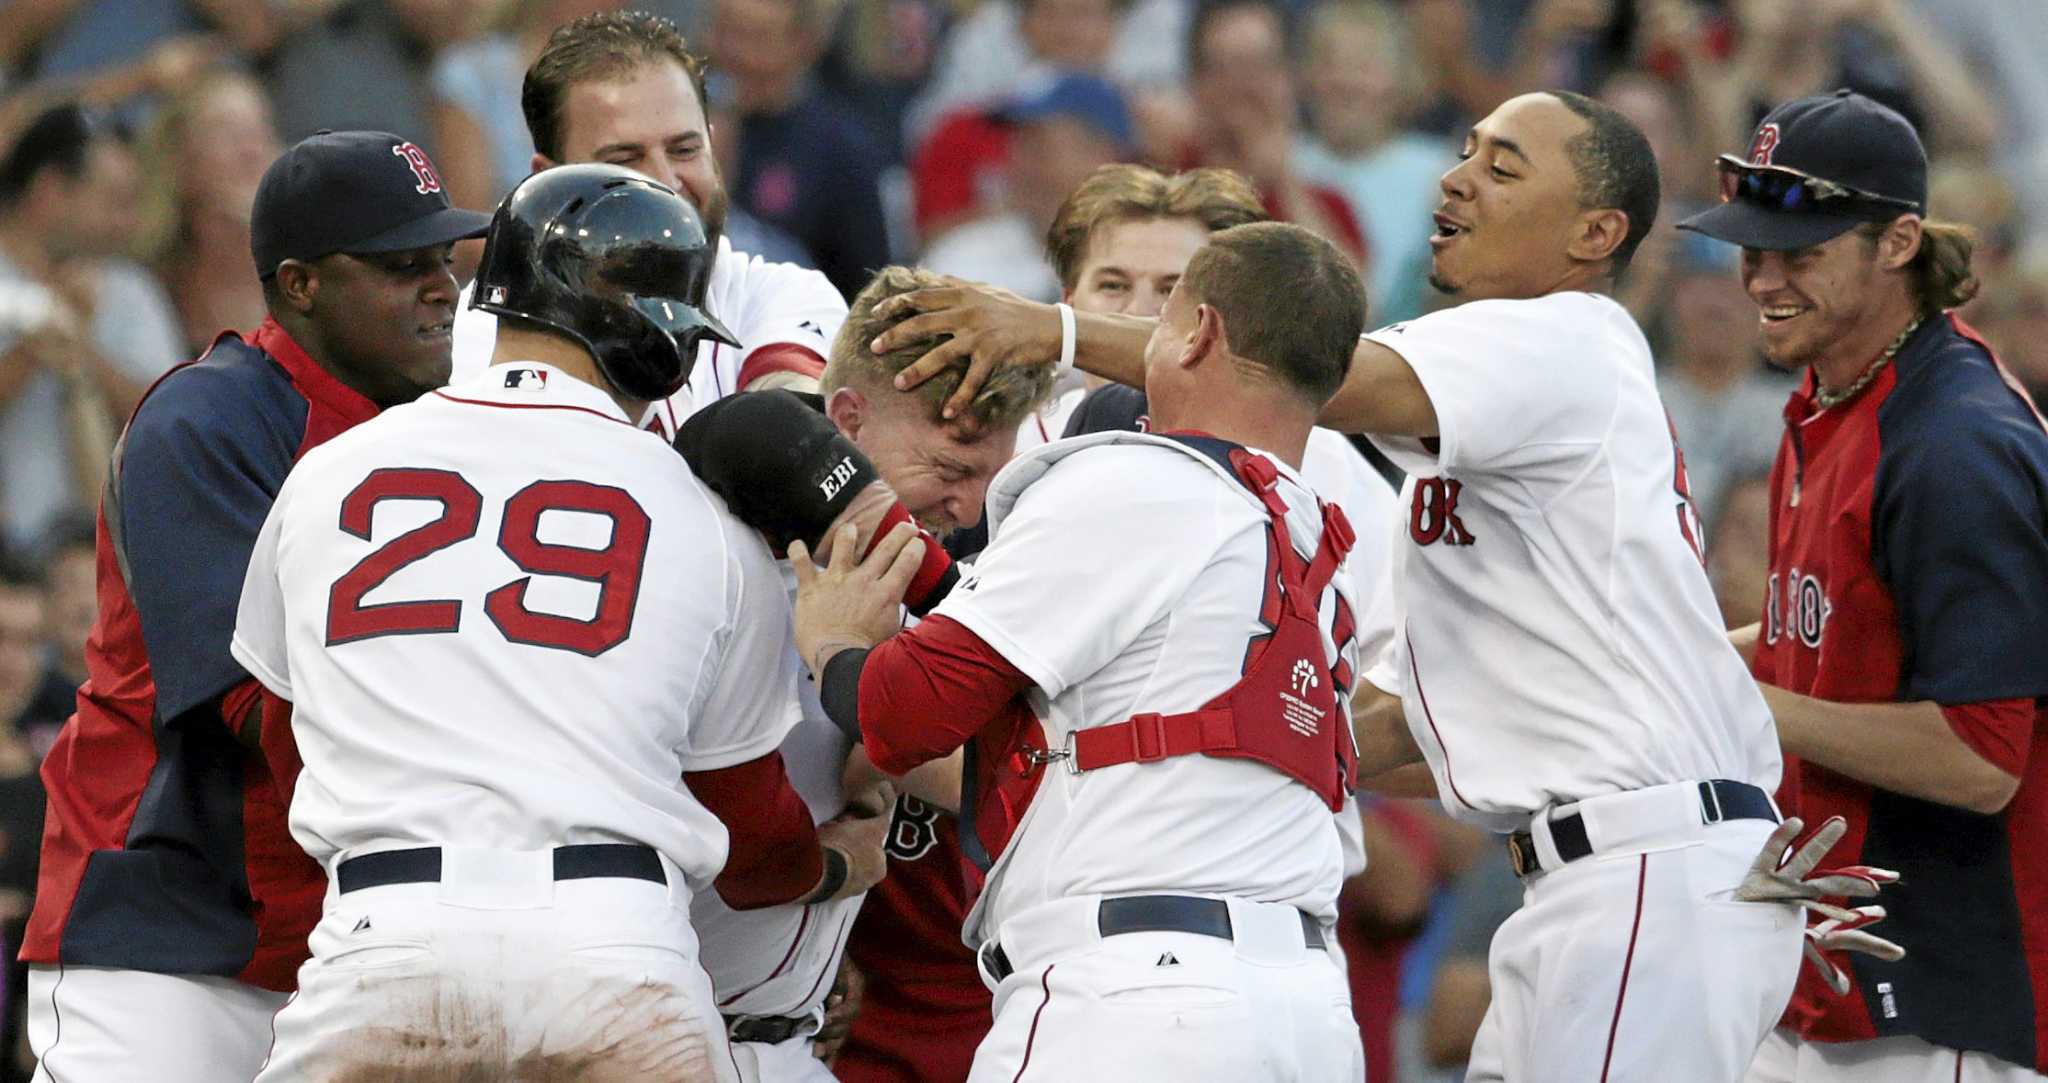 Red Sox World Series Champ Koji Uehara Announces Retirement